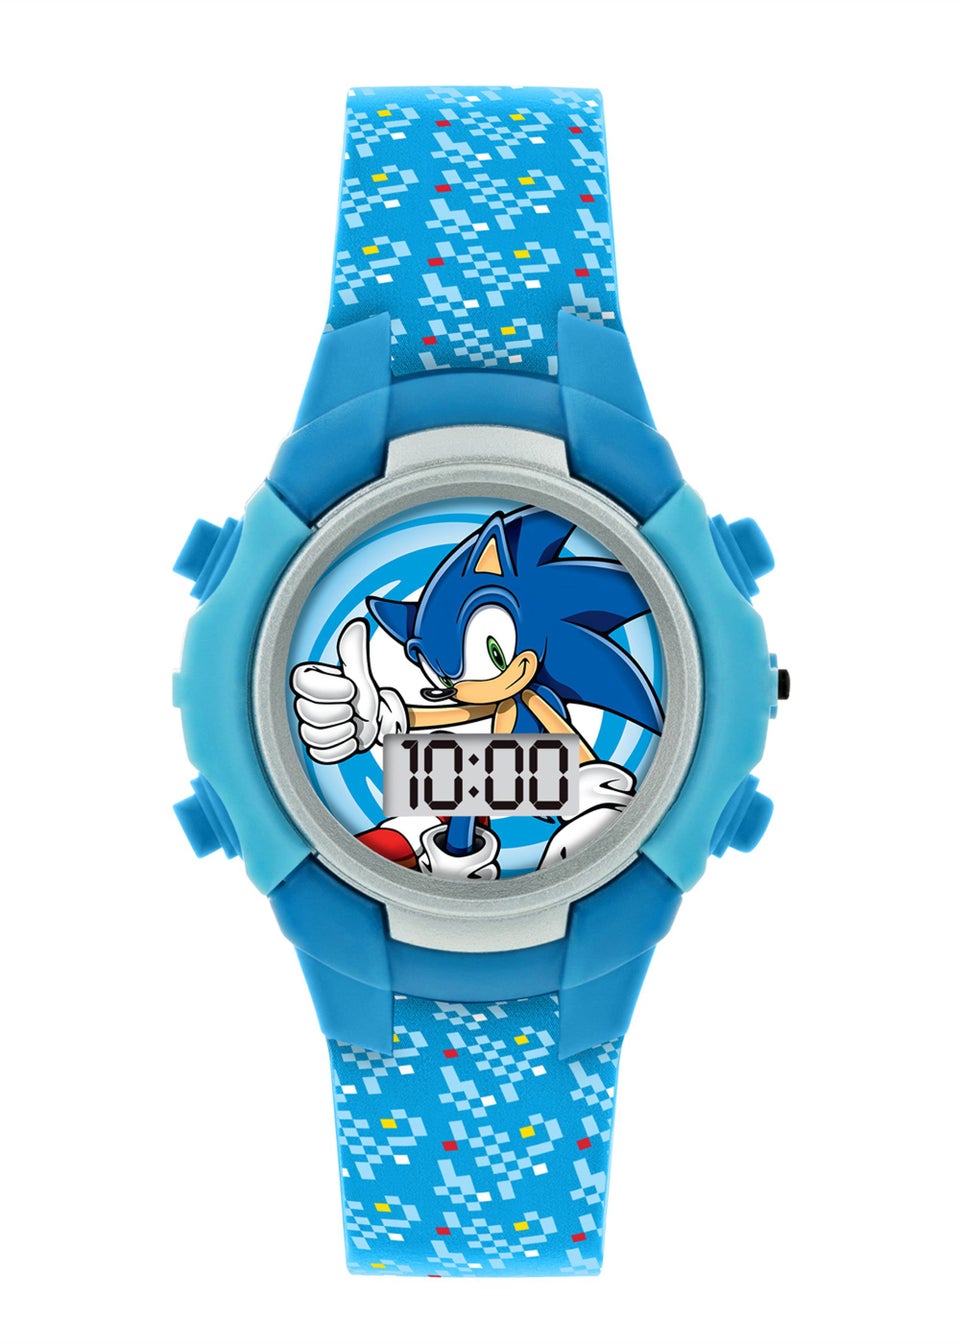 Kids Blue Sonic the Hedgehog Flashing Watch (One Size)